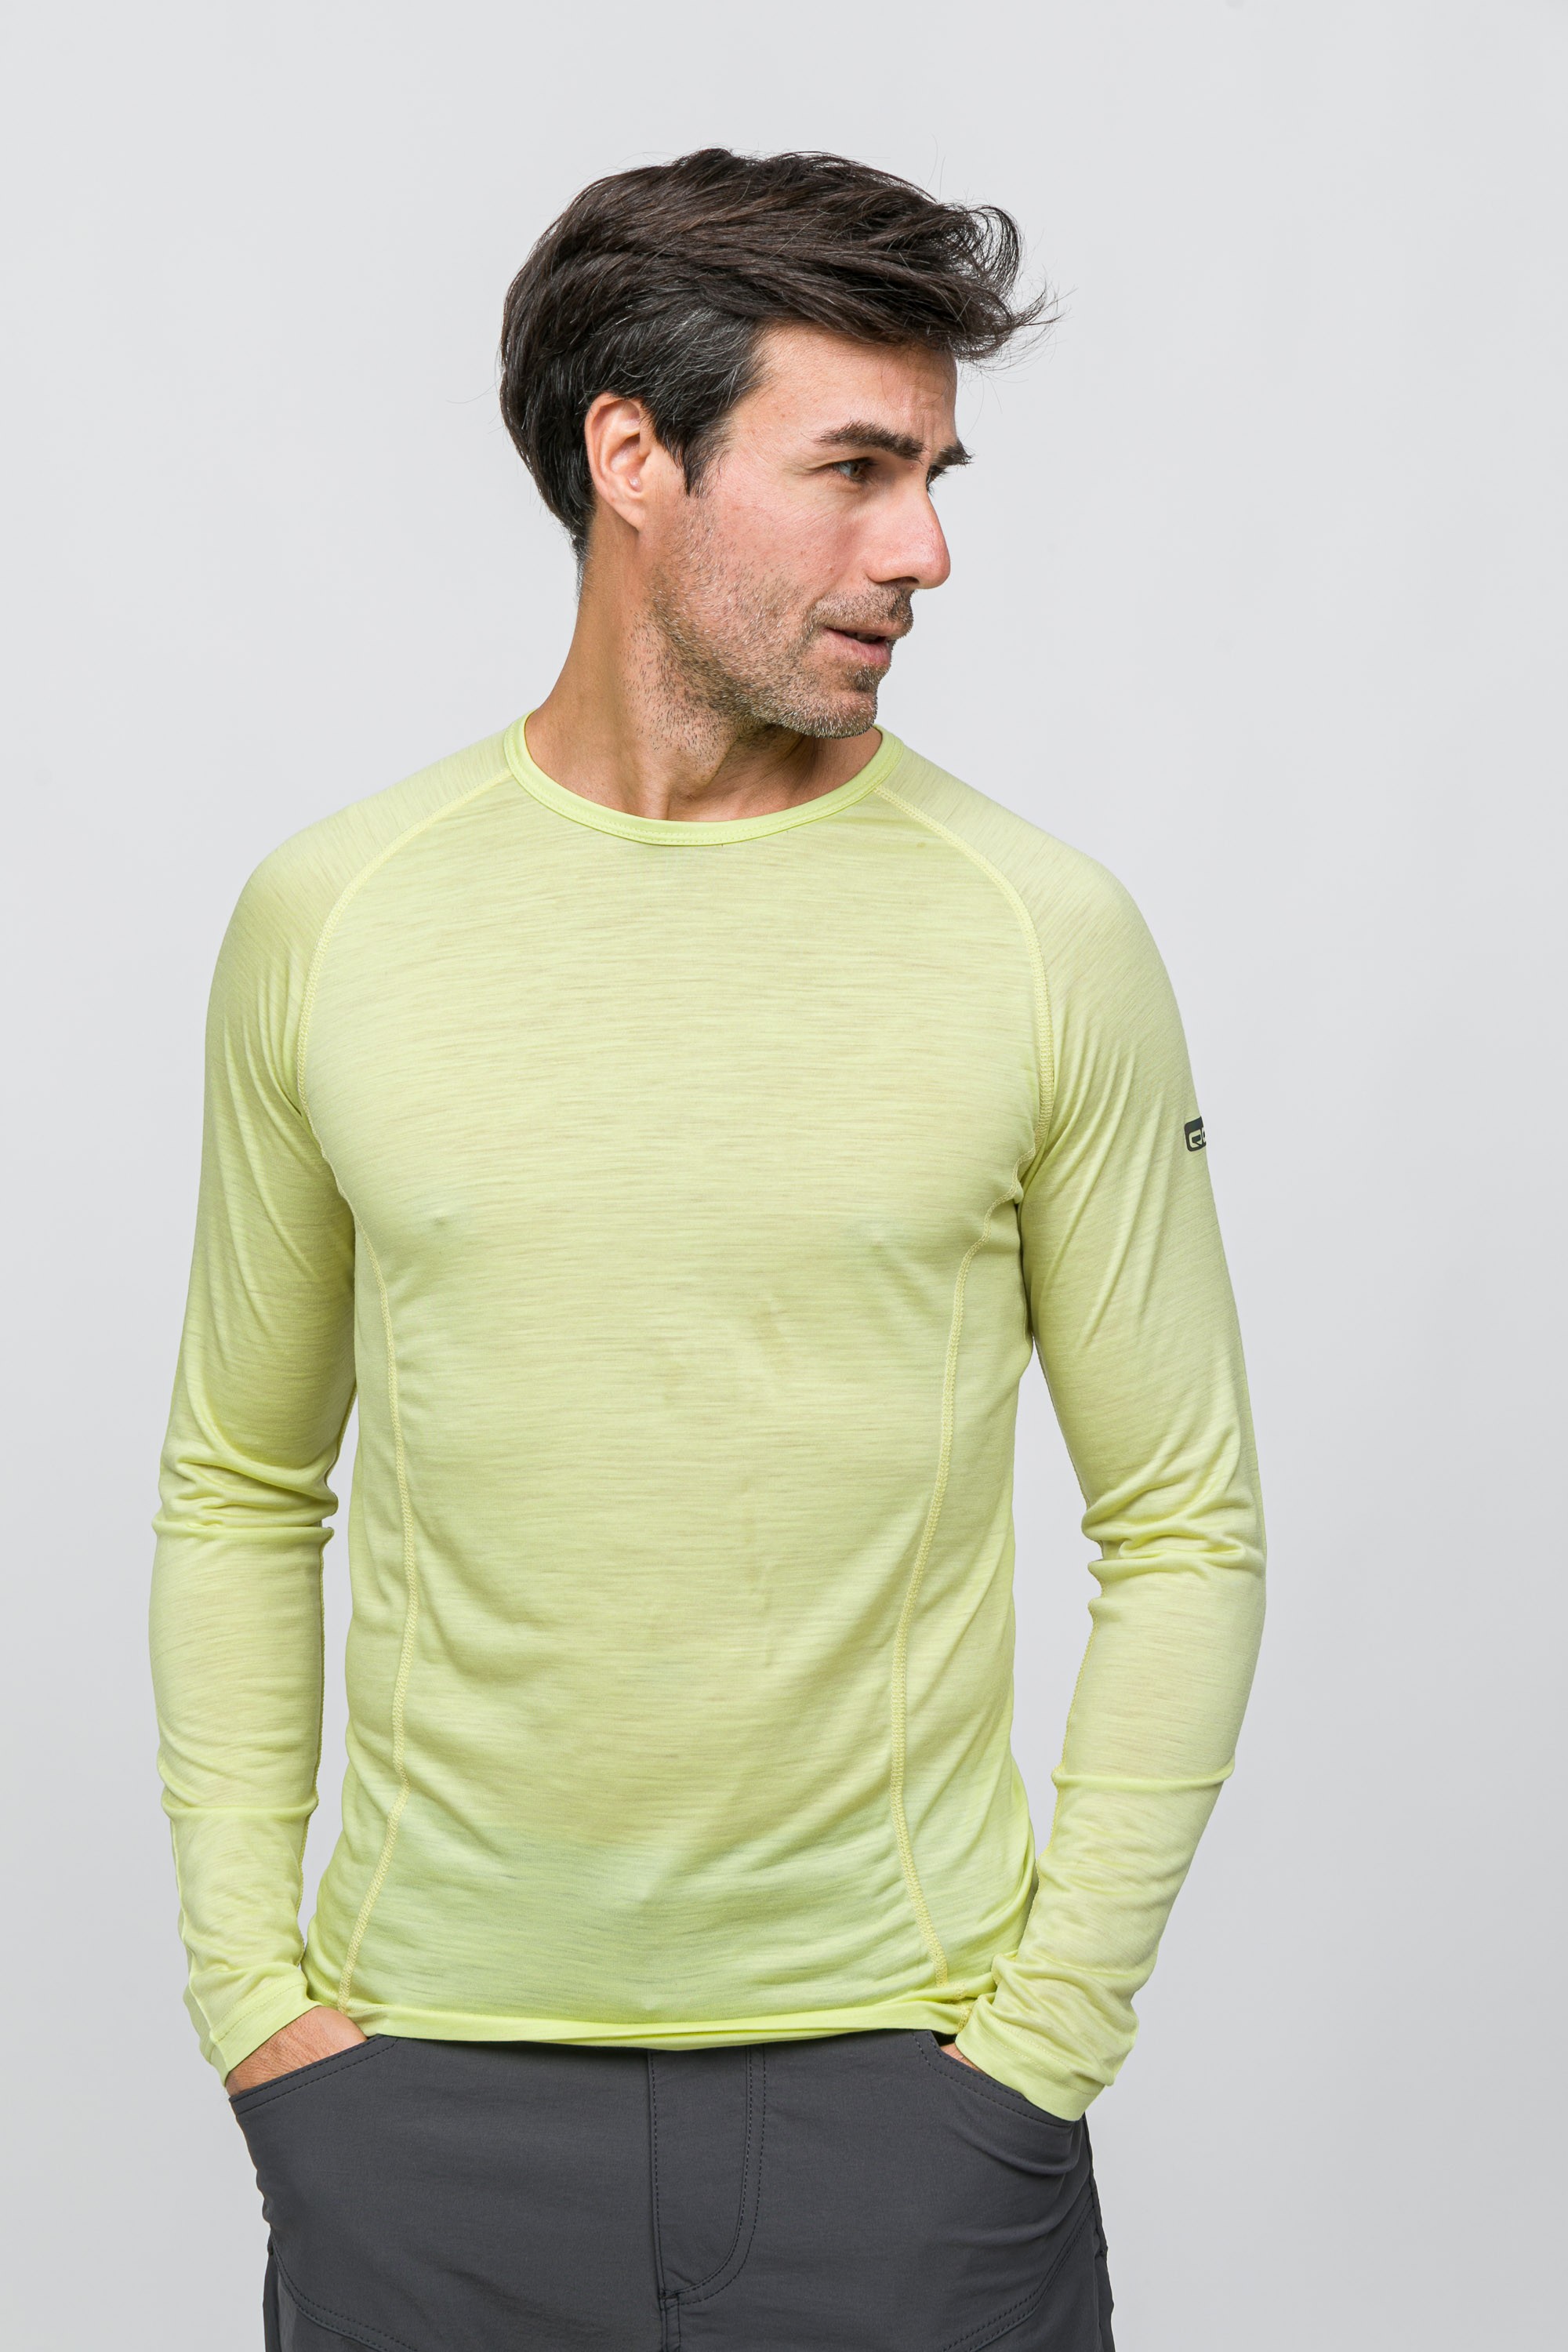 All-Season Merino Uzun Kollu T-Shirt 135 gr - Lime